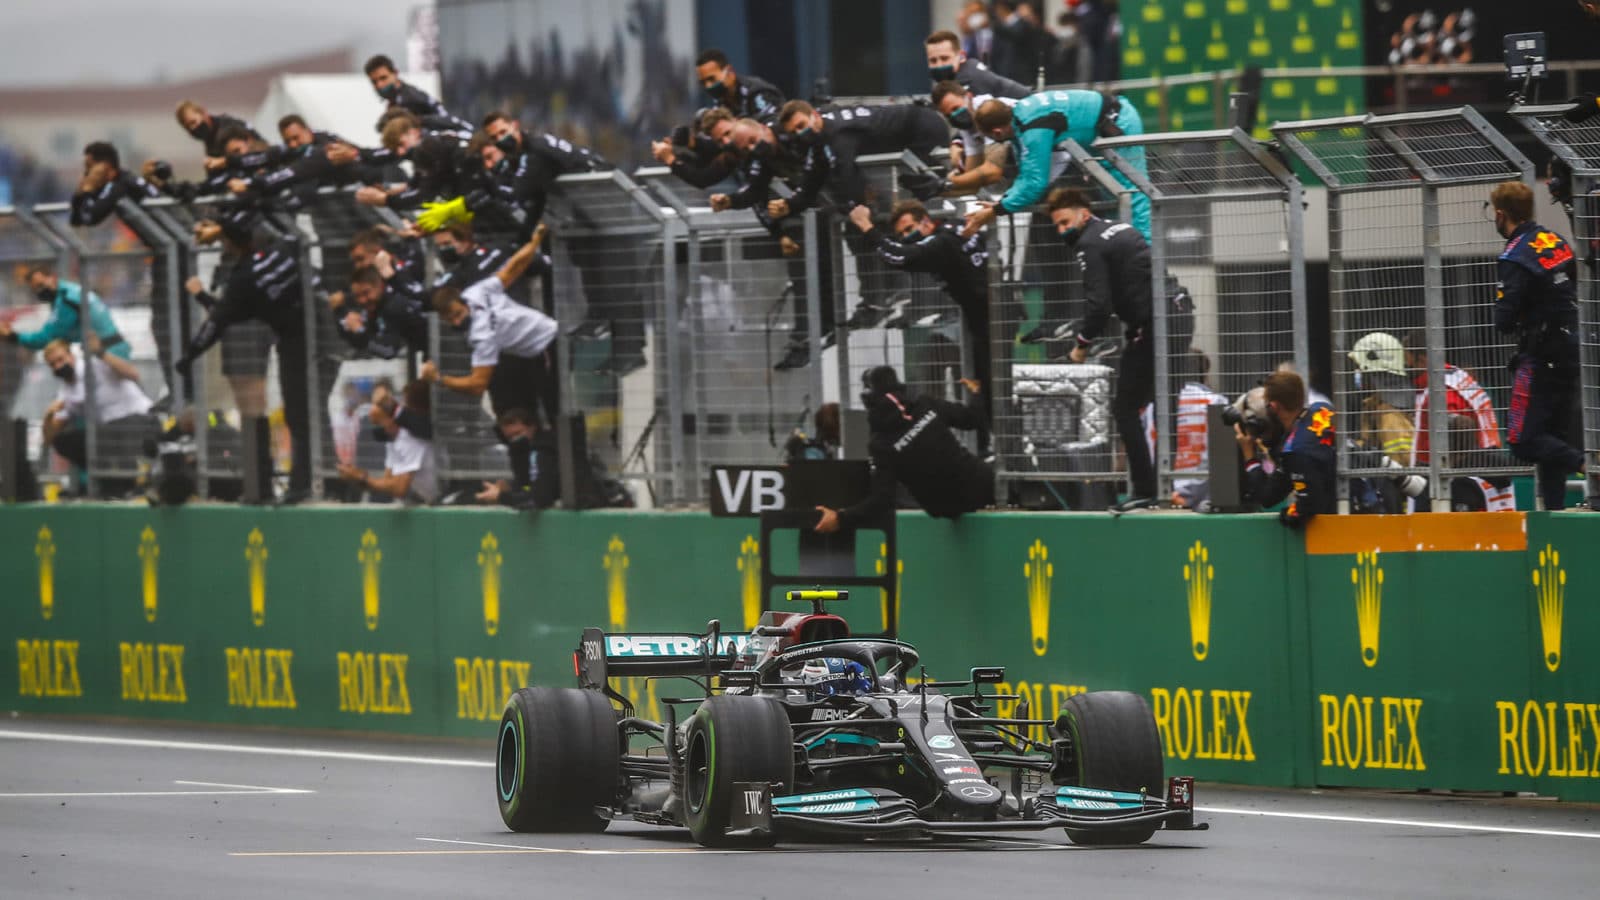 Valtteri Bottas crosses the line to win the 2021 Turkish Grand Prix